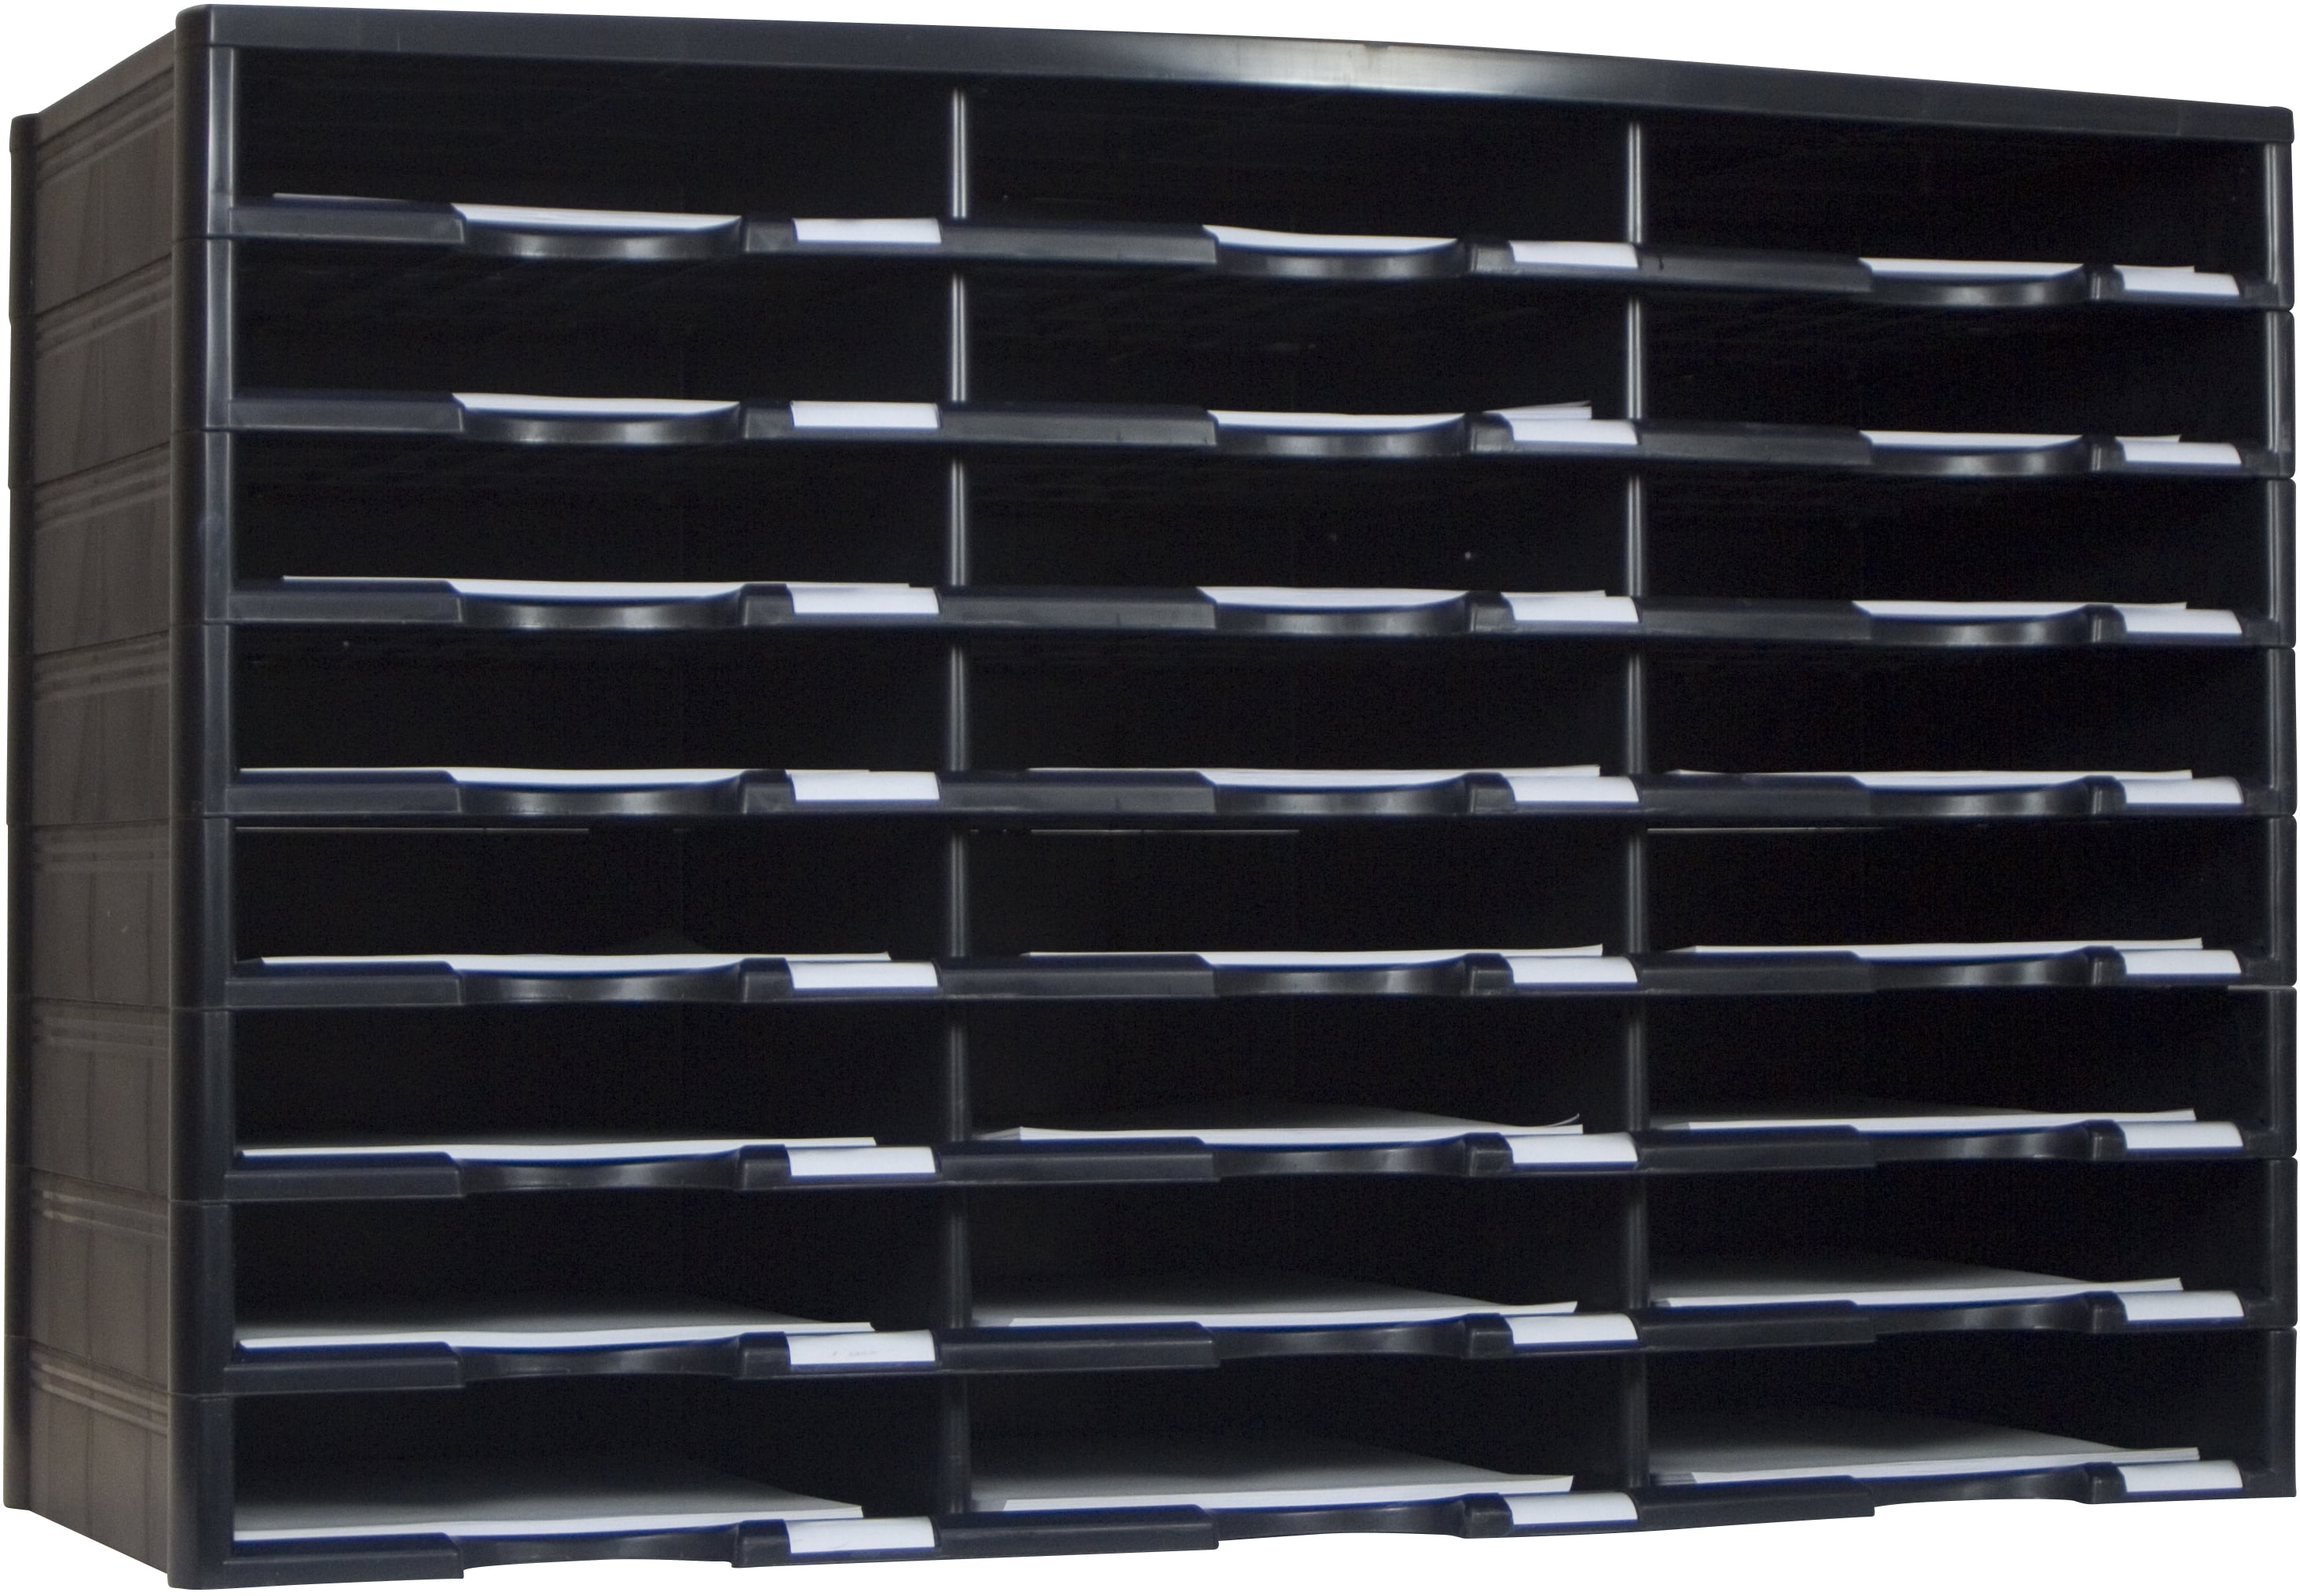 Storex Stackable Literature Sorter 24 Compartment - Black